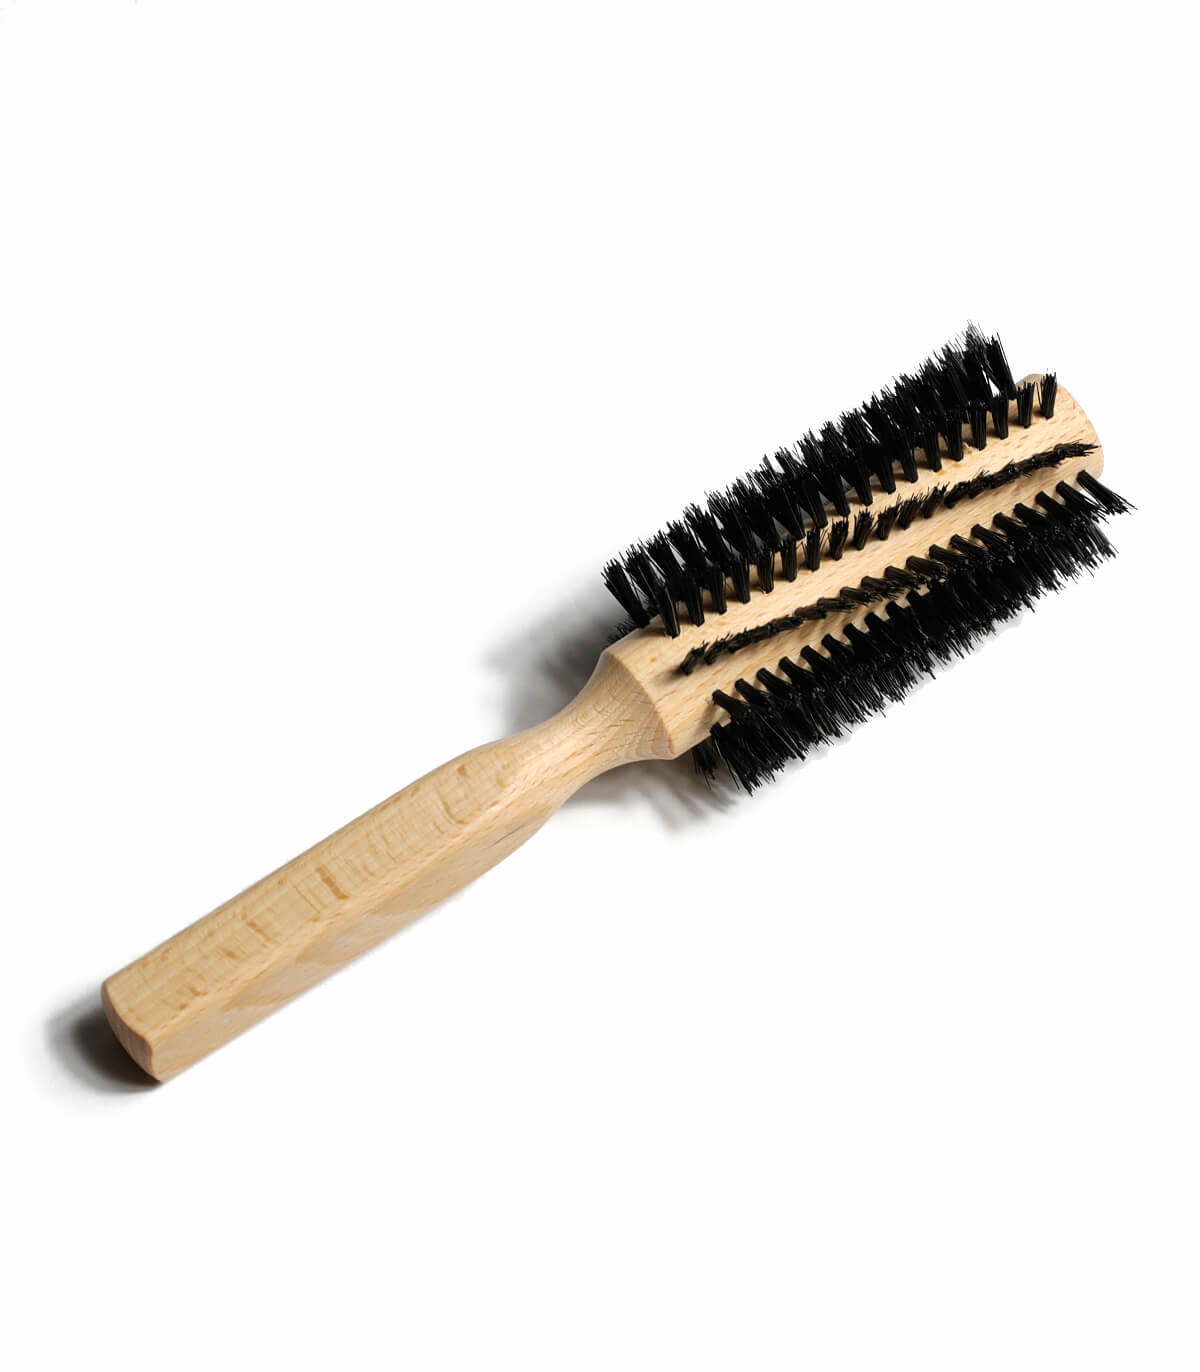 8 Best Hair Brush For African American Hair 2023 - Hair Everyday Review